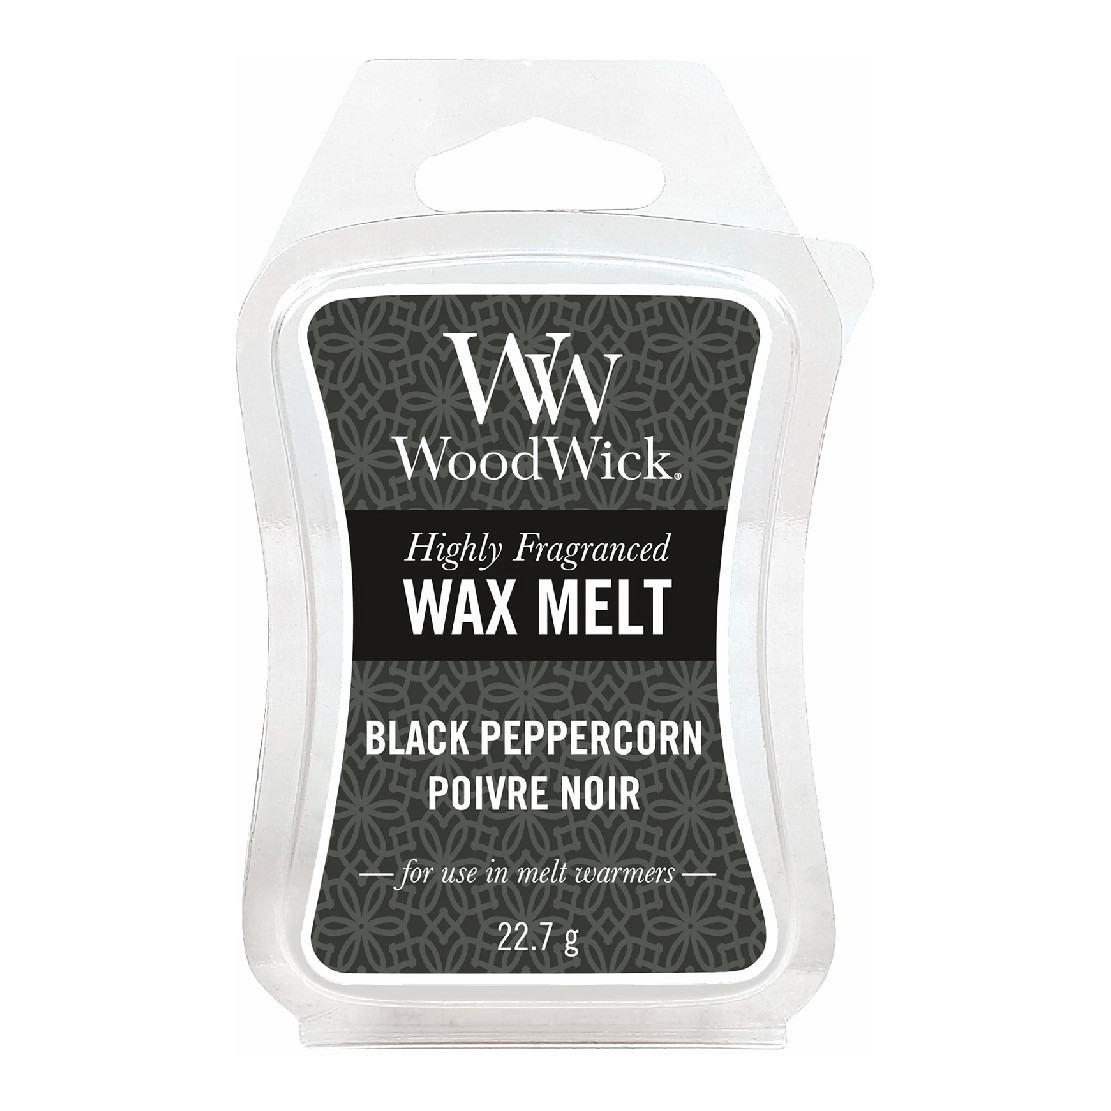 Woodwick Black Peppercorn Wax Melt